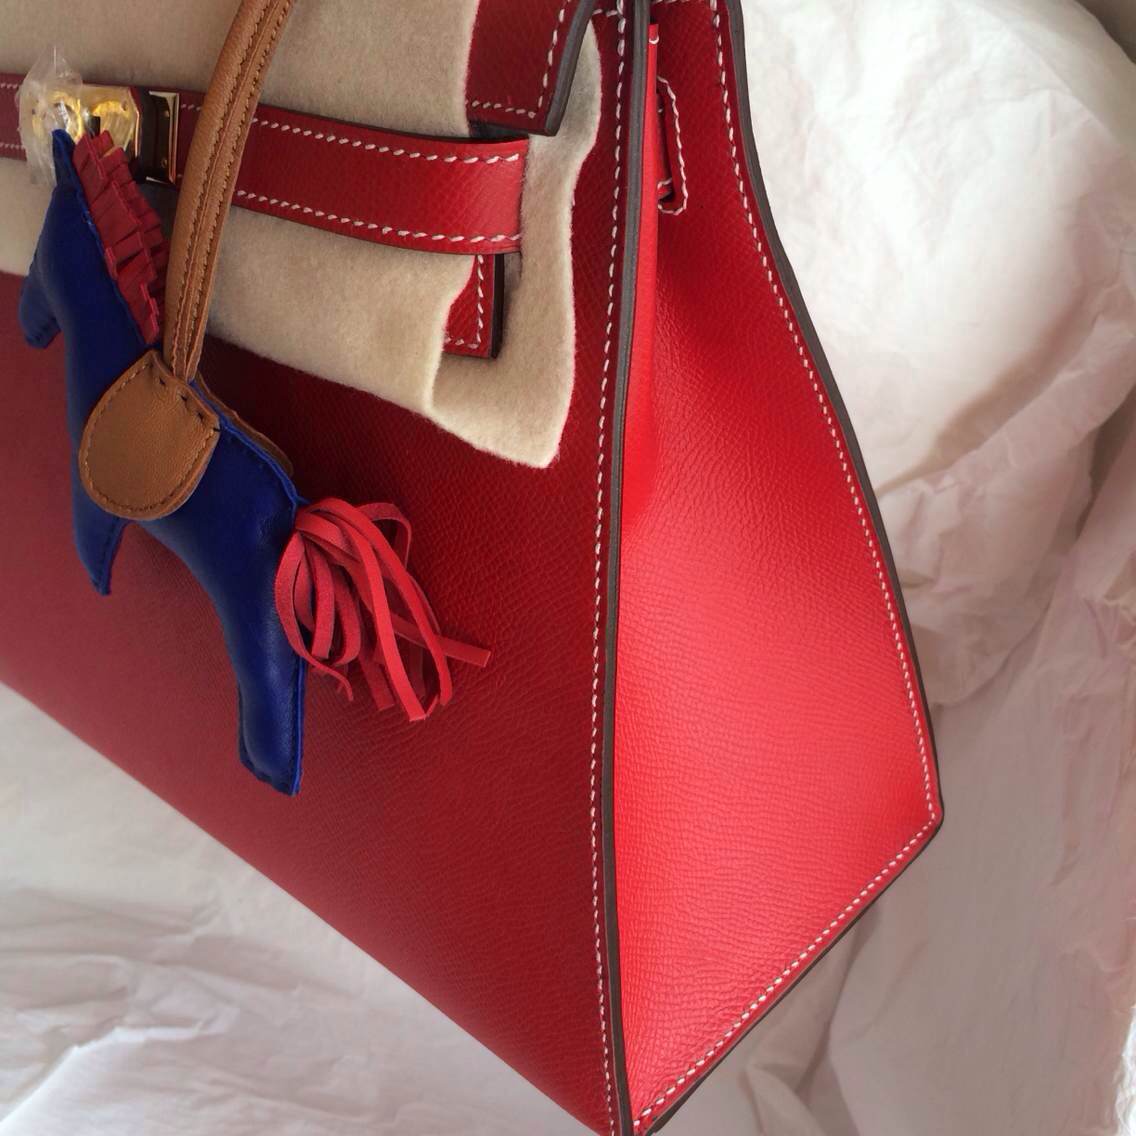 Fashion Hermes Kelly Bag 28cm Sellier France Epsom Leather Q5 Candy Red/inner Blue Jean